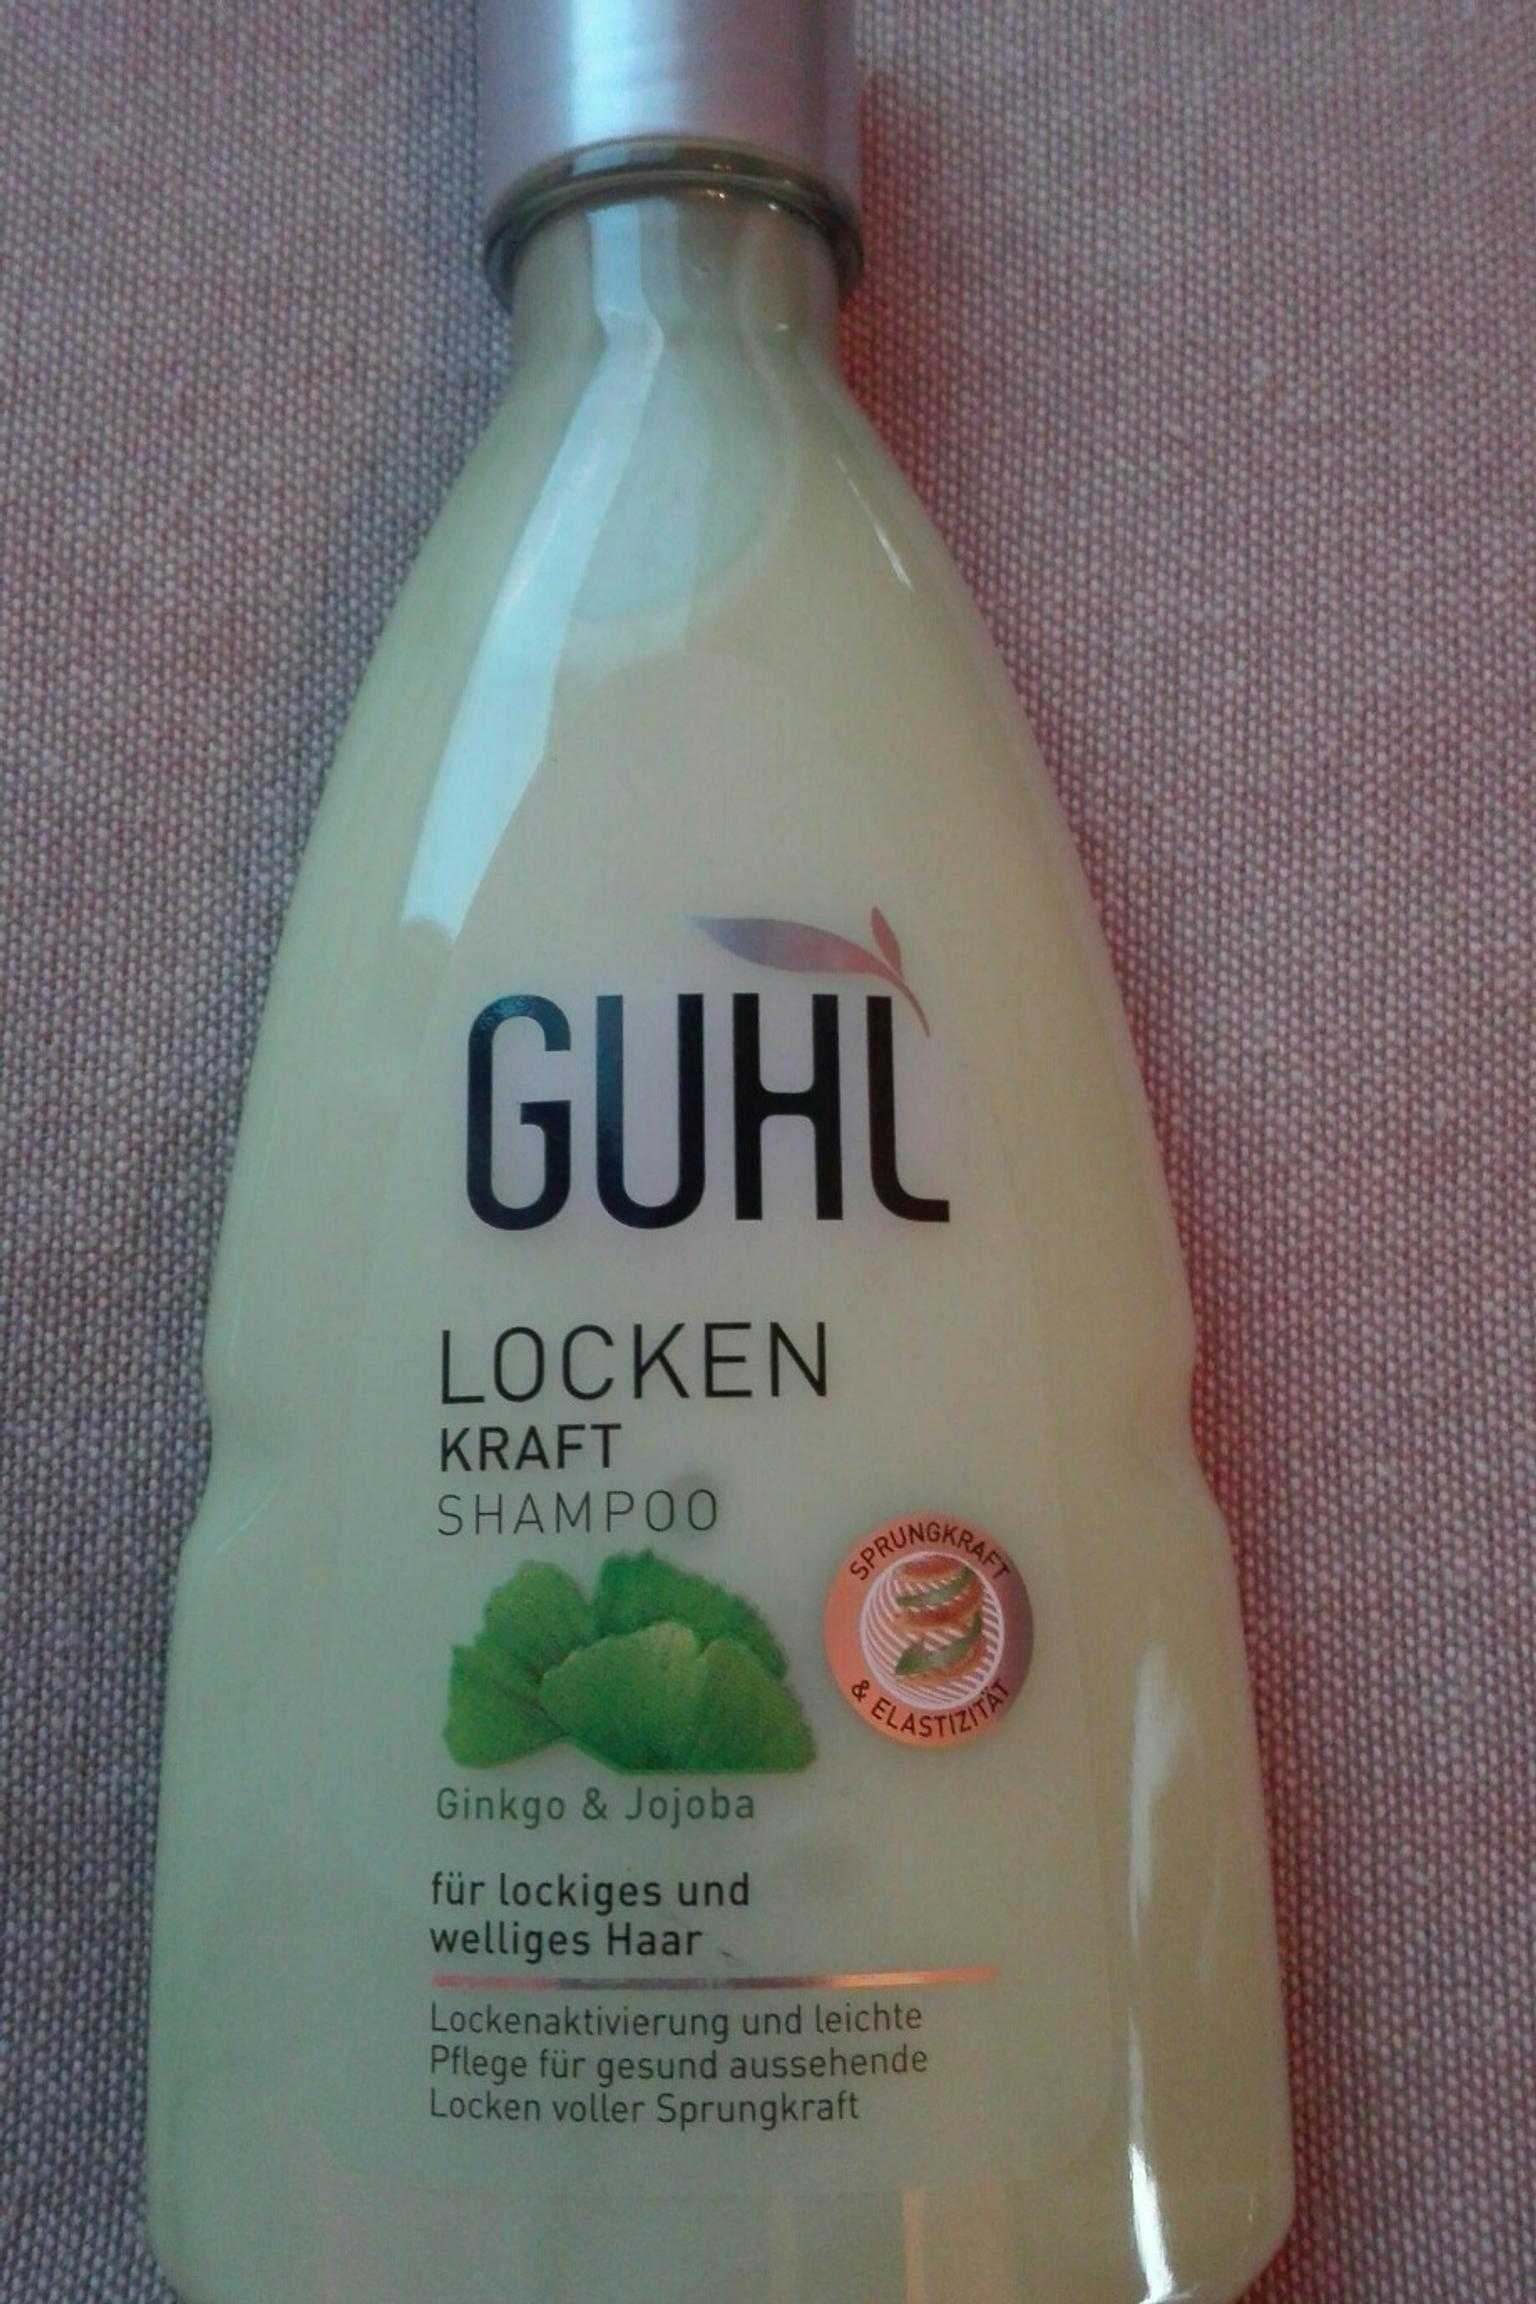 Guhl Locken Shampoo In 67105 Schifferstadt Fur 6 00 Zum Verkauf Shpock De